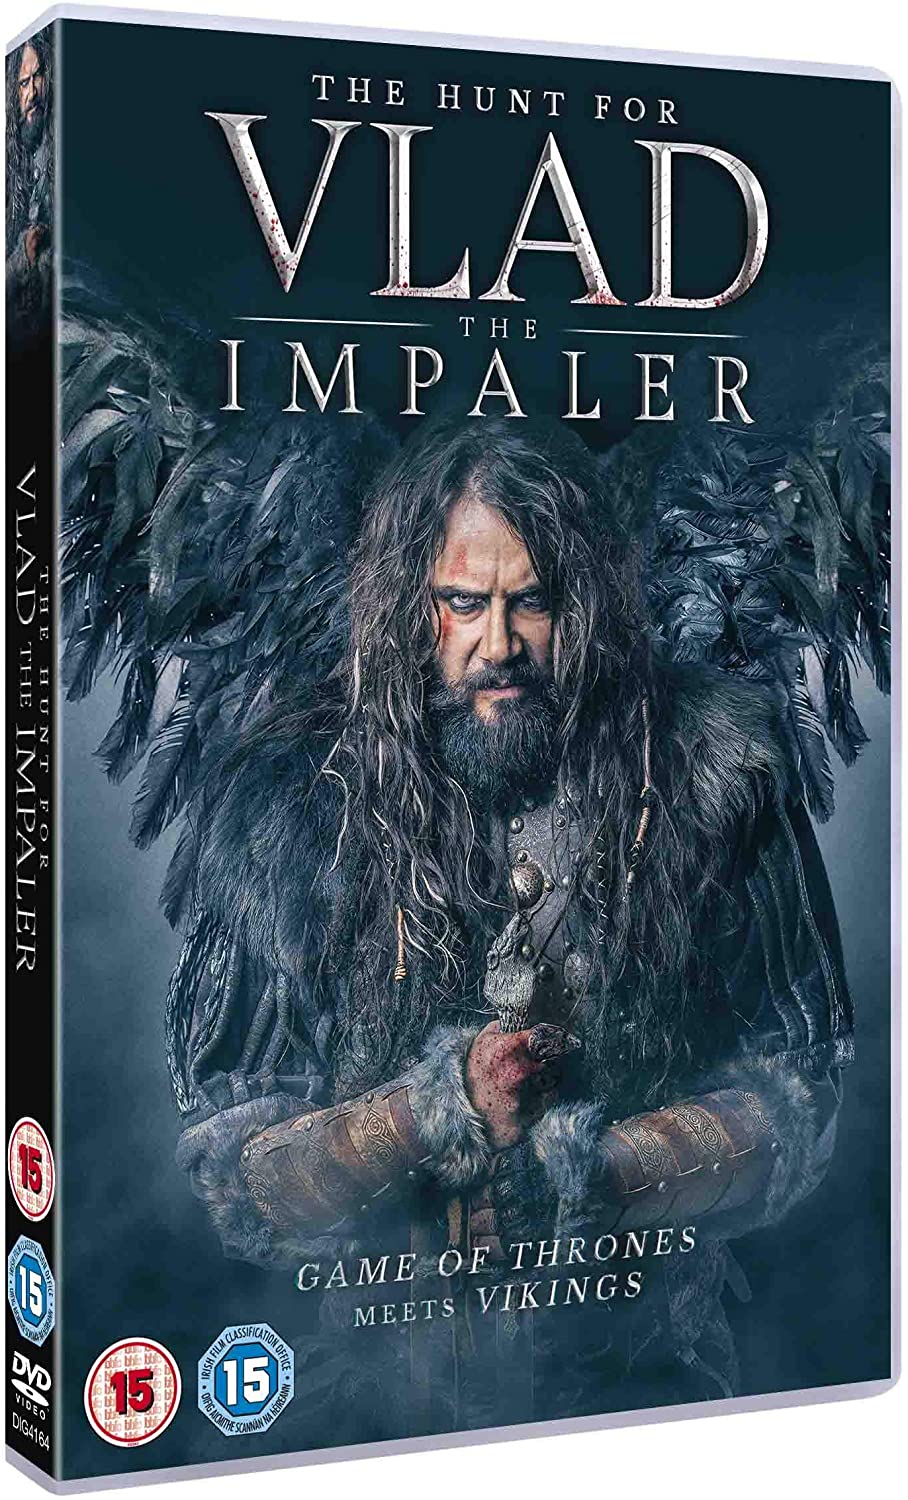 Vlad The Impaler - Action/Thriller [DVD]